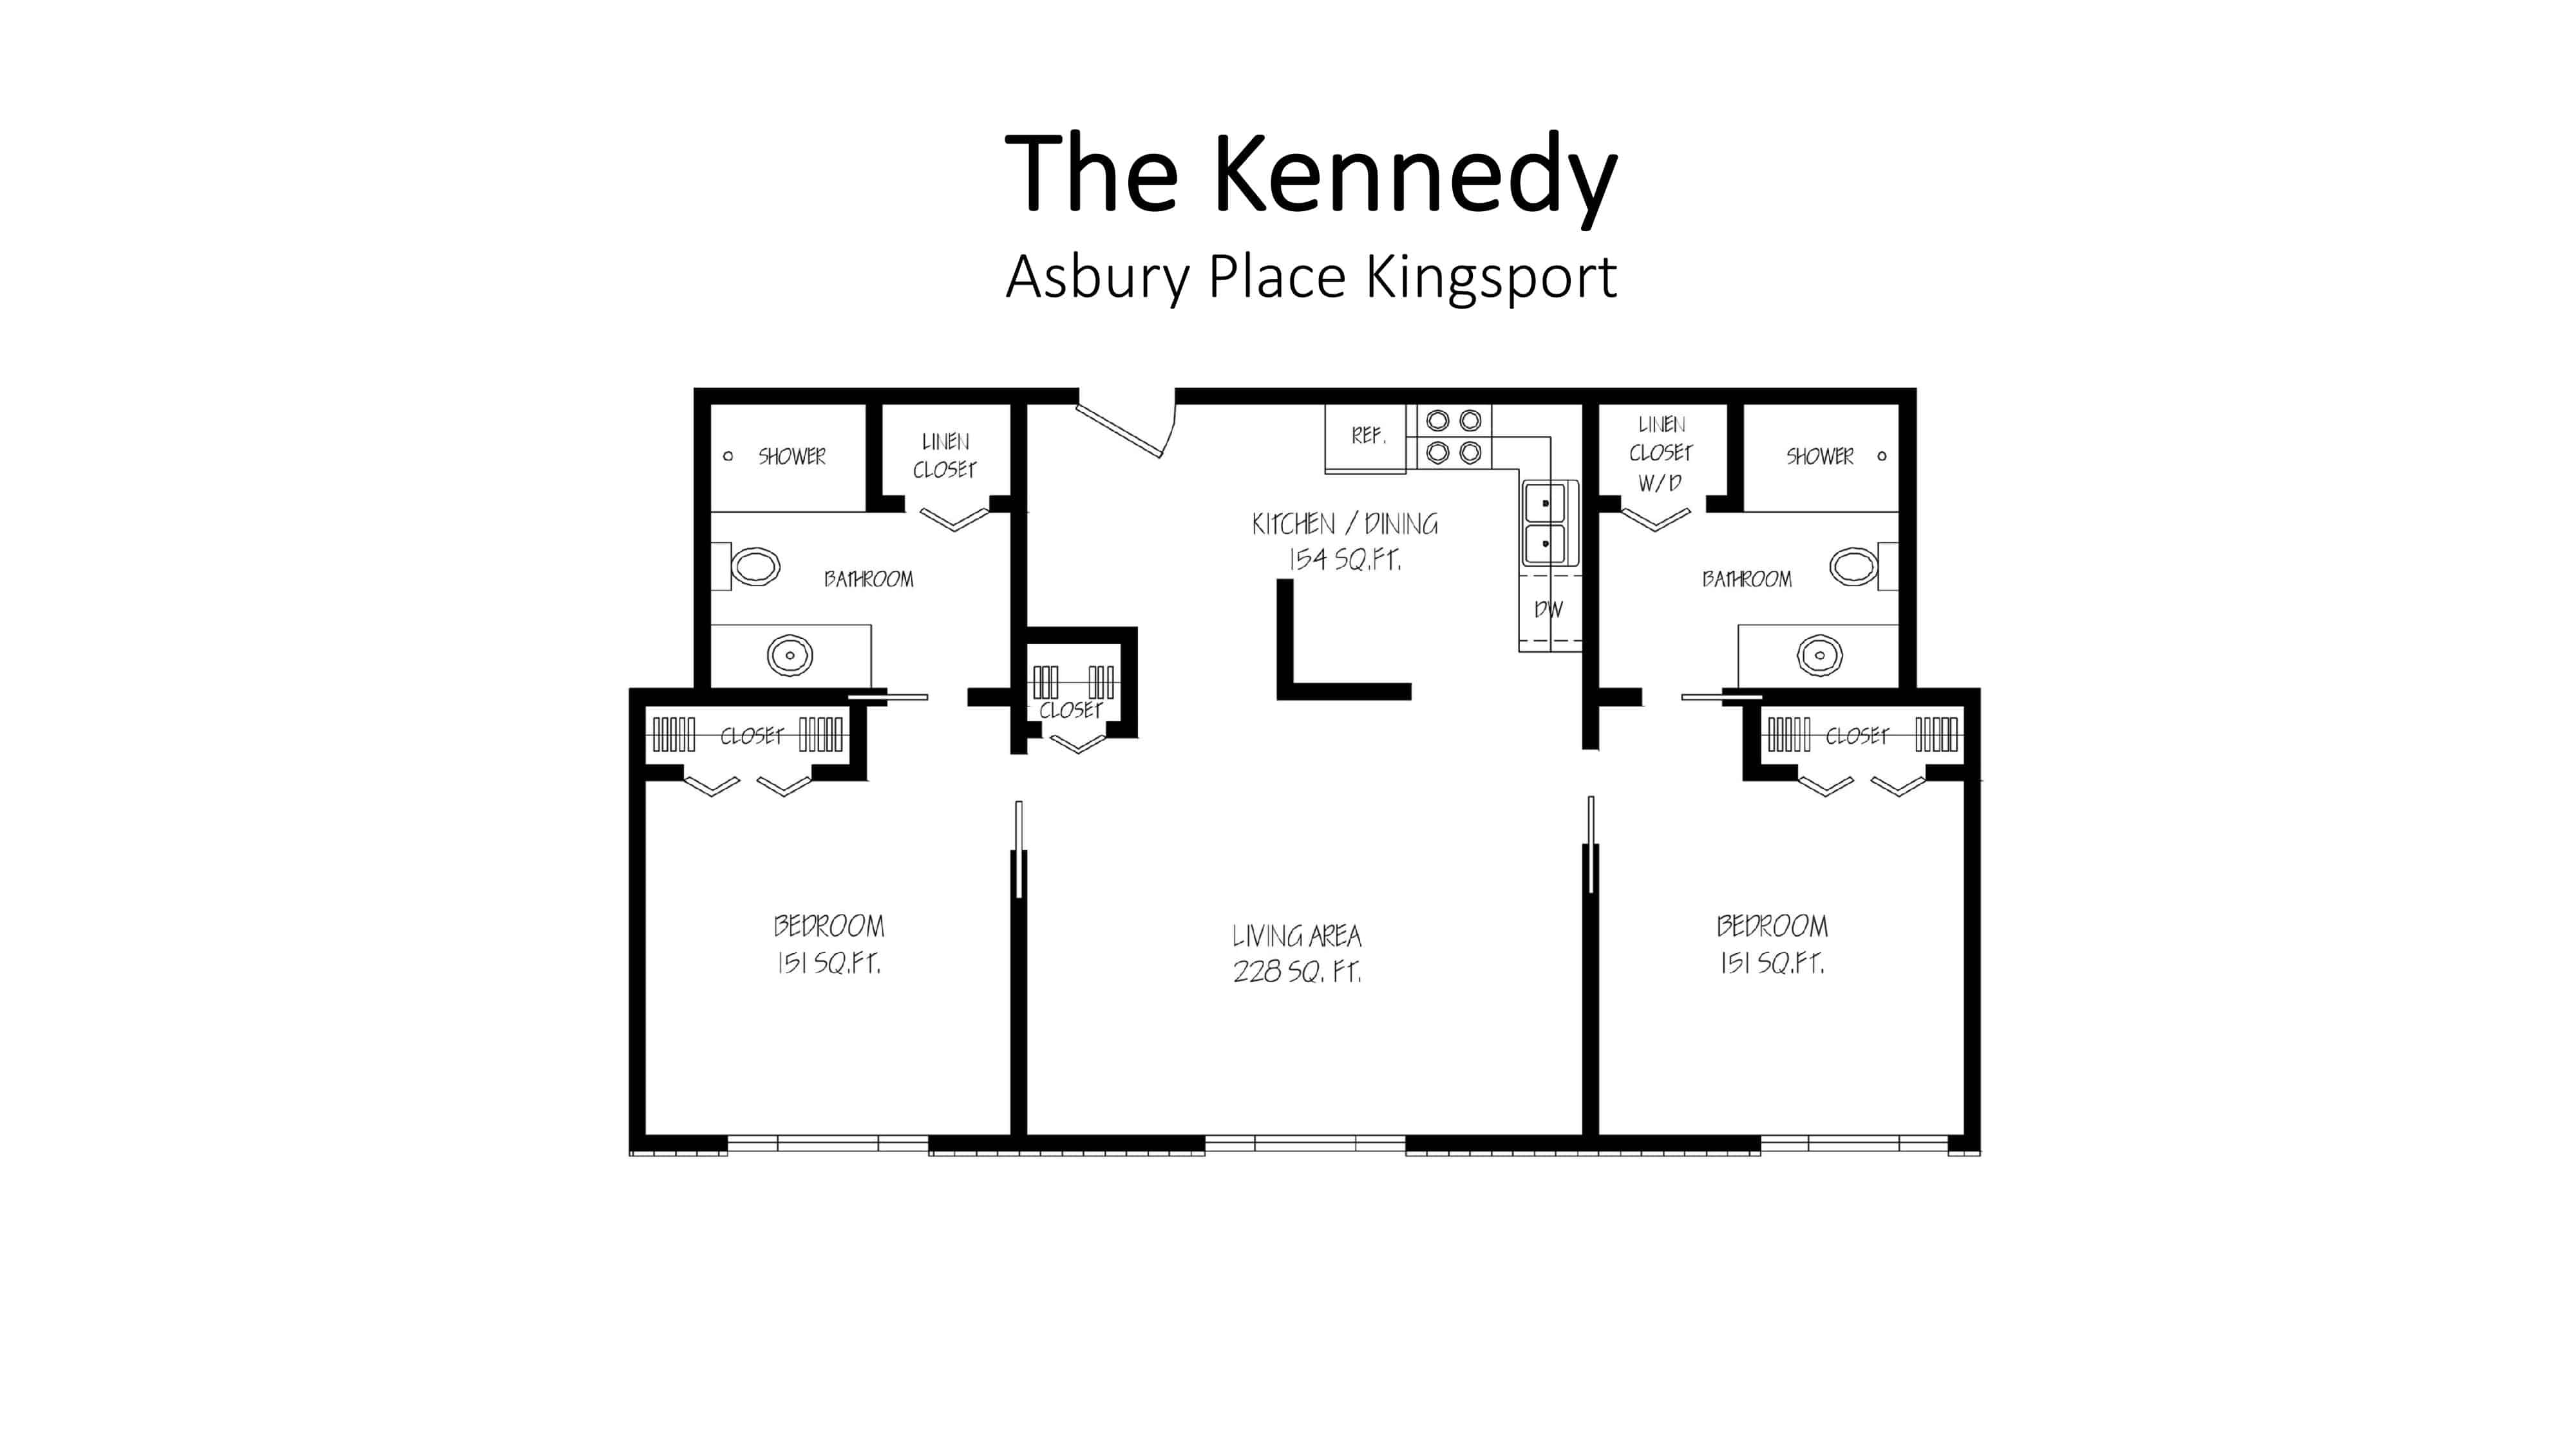 Asbury Place Kingsport The Kennedy Floorplan